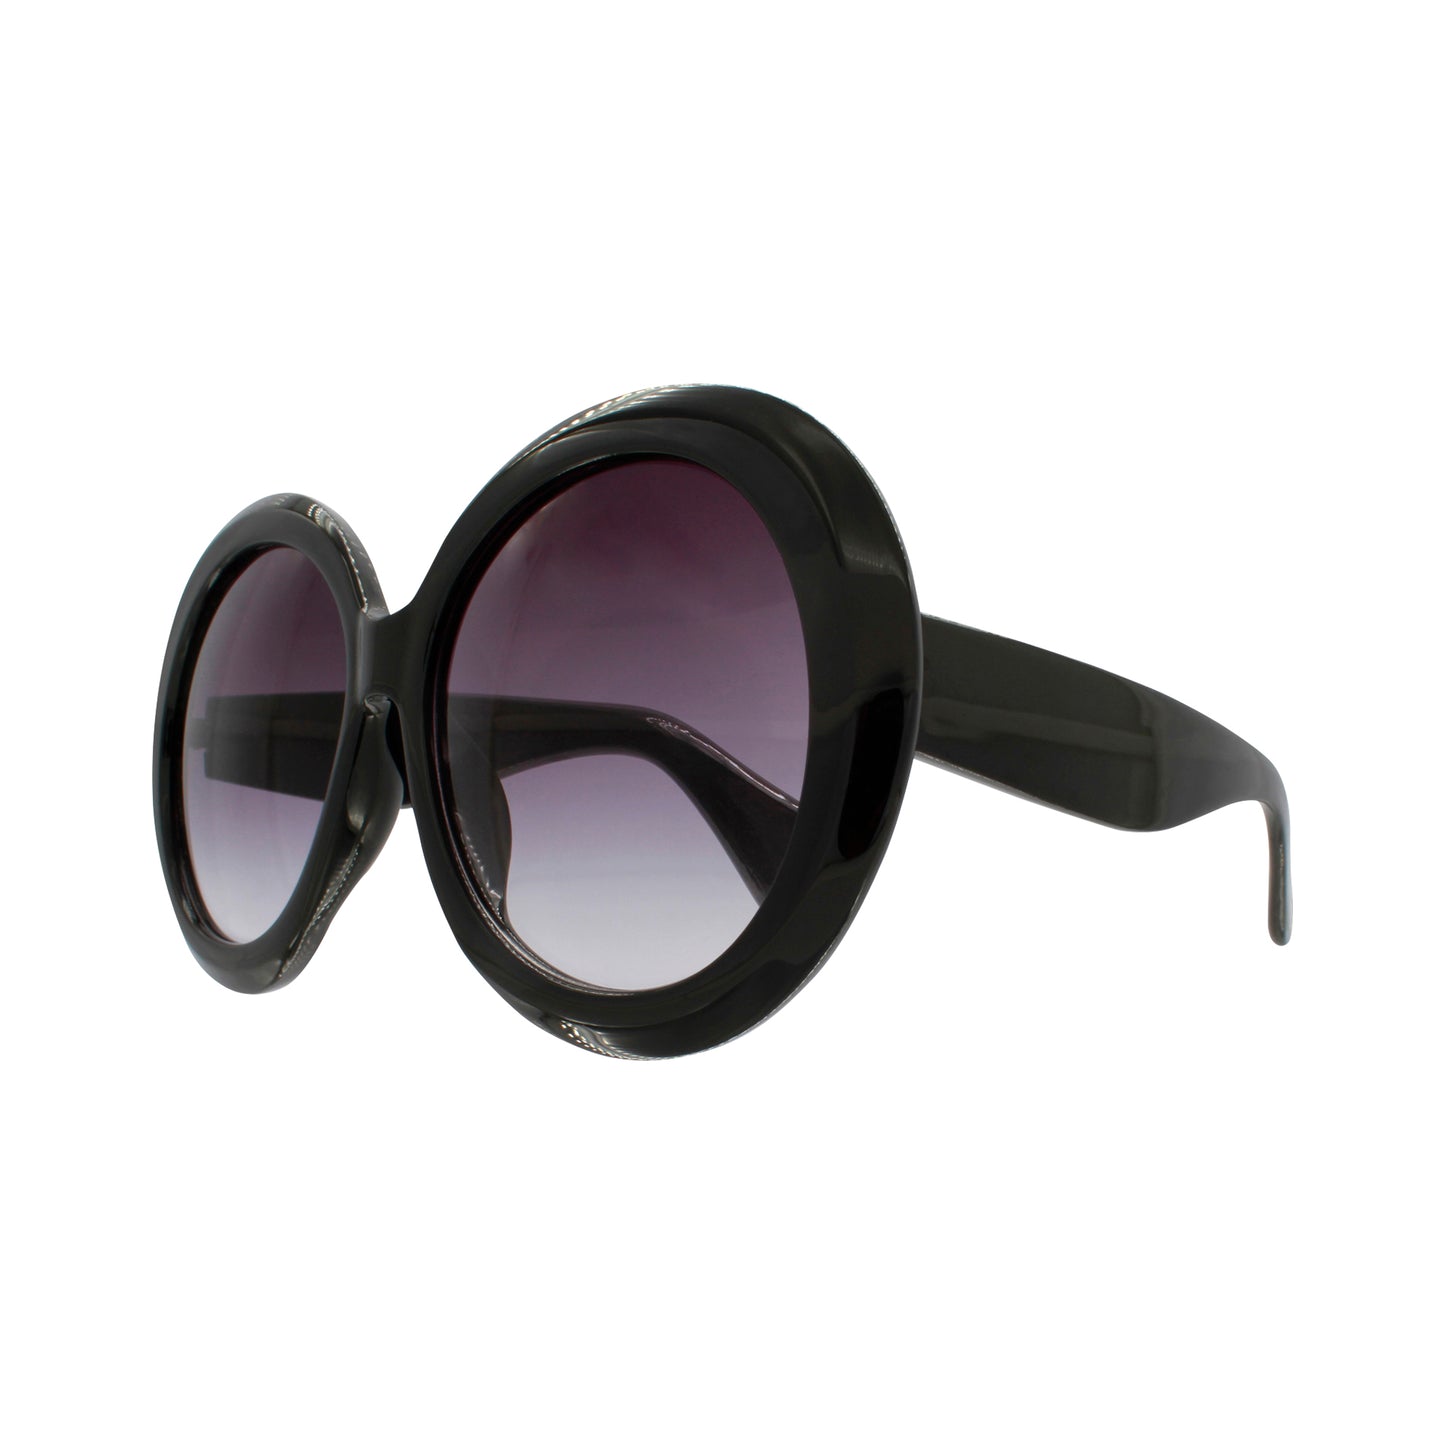 Sabine Black Sunglasses UV400 Protection